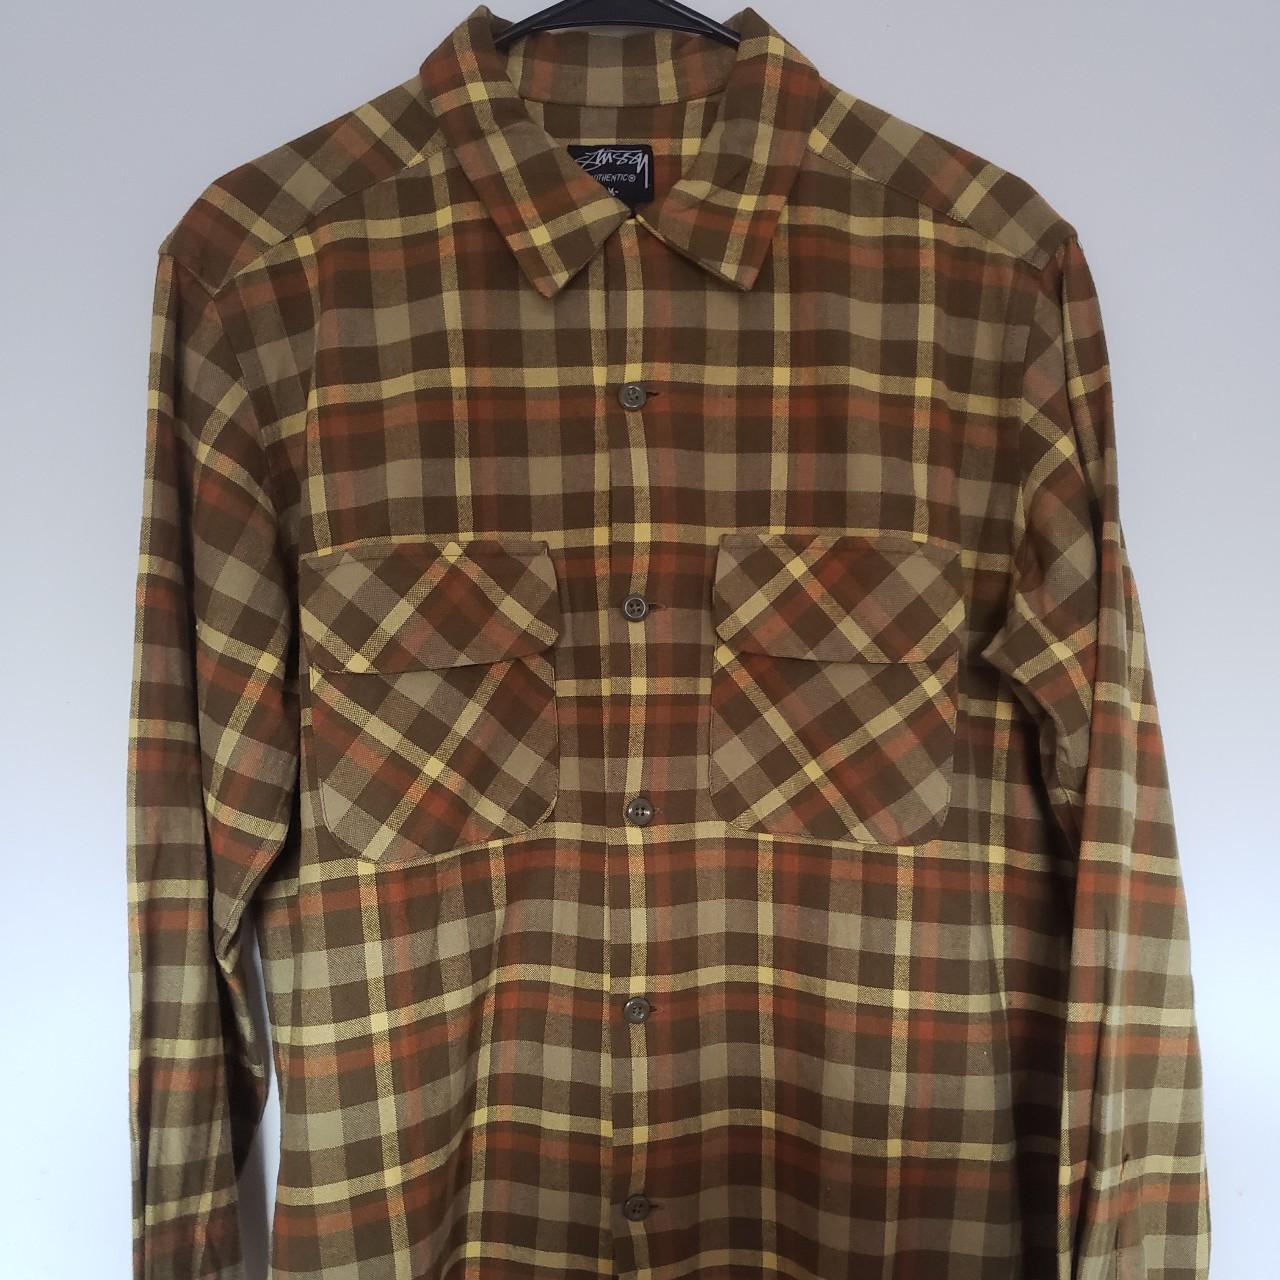 Vintage 90s Stussy Flannel Shirt Sz M $60 Serious... - Depop